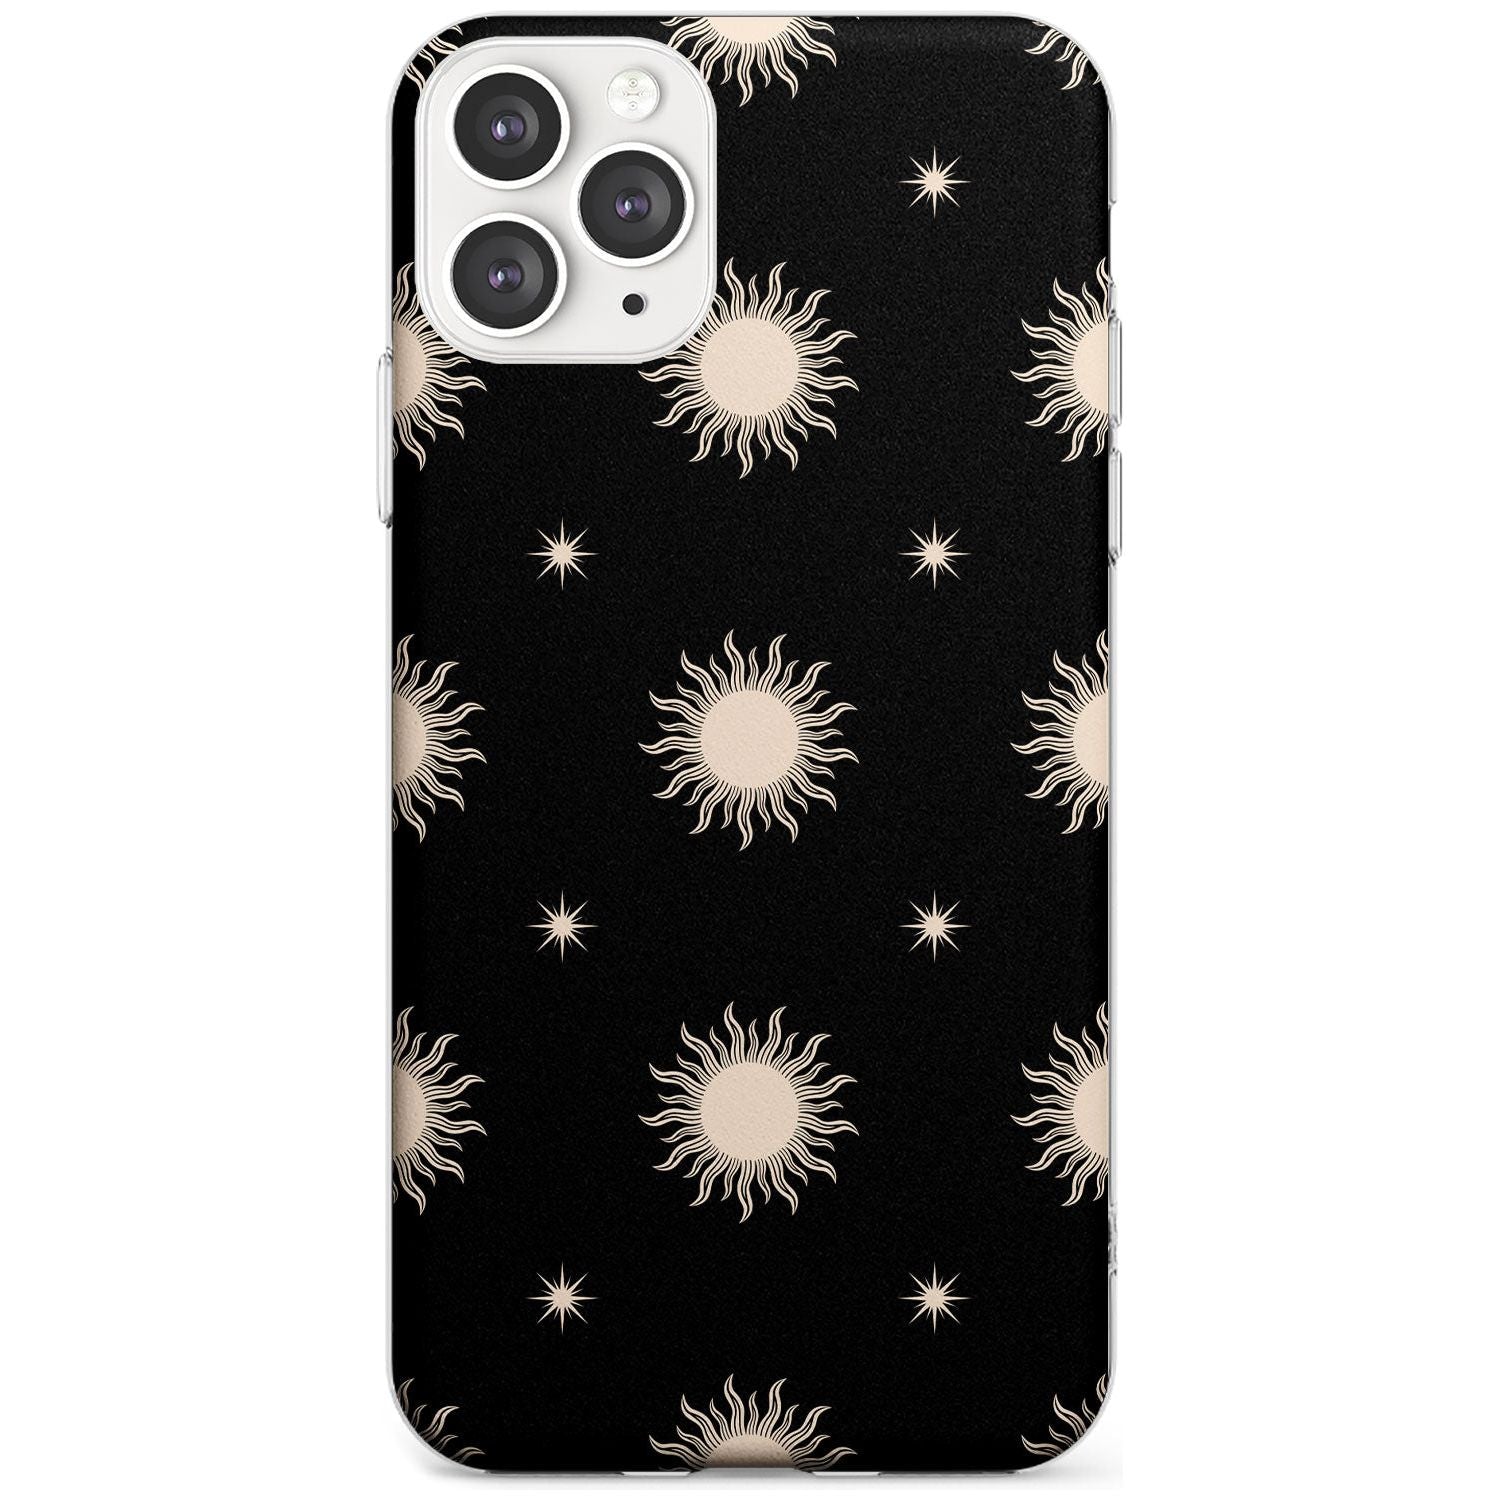 Celestial Patterns Classic Suns (Black) Phone Case iPhone 11 Pro Max / Clear Case,iPhone 11 Pro / Clear Case,iPhone 12 Pro Max / Clear Case,iPhone 12 Pro / Clear Case Blanc Space